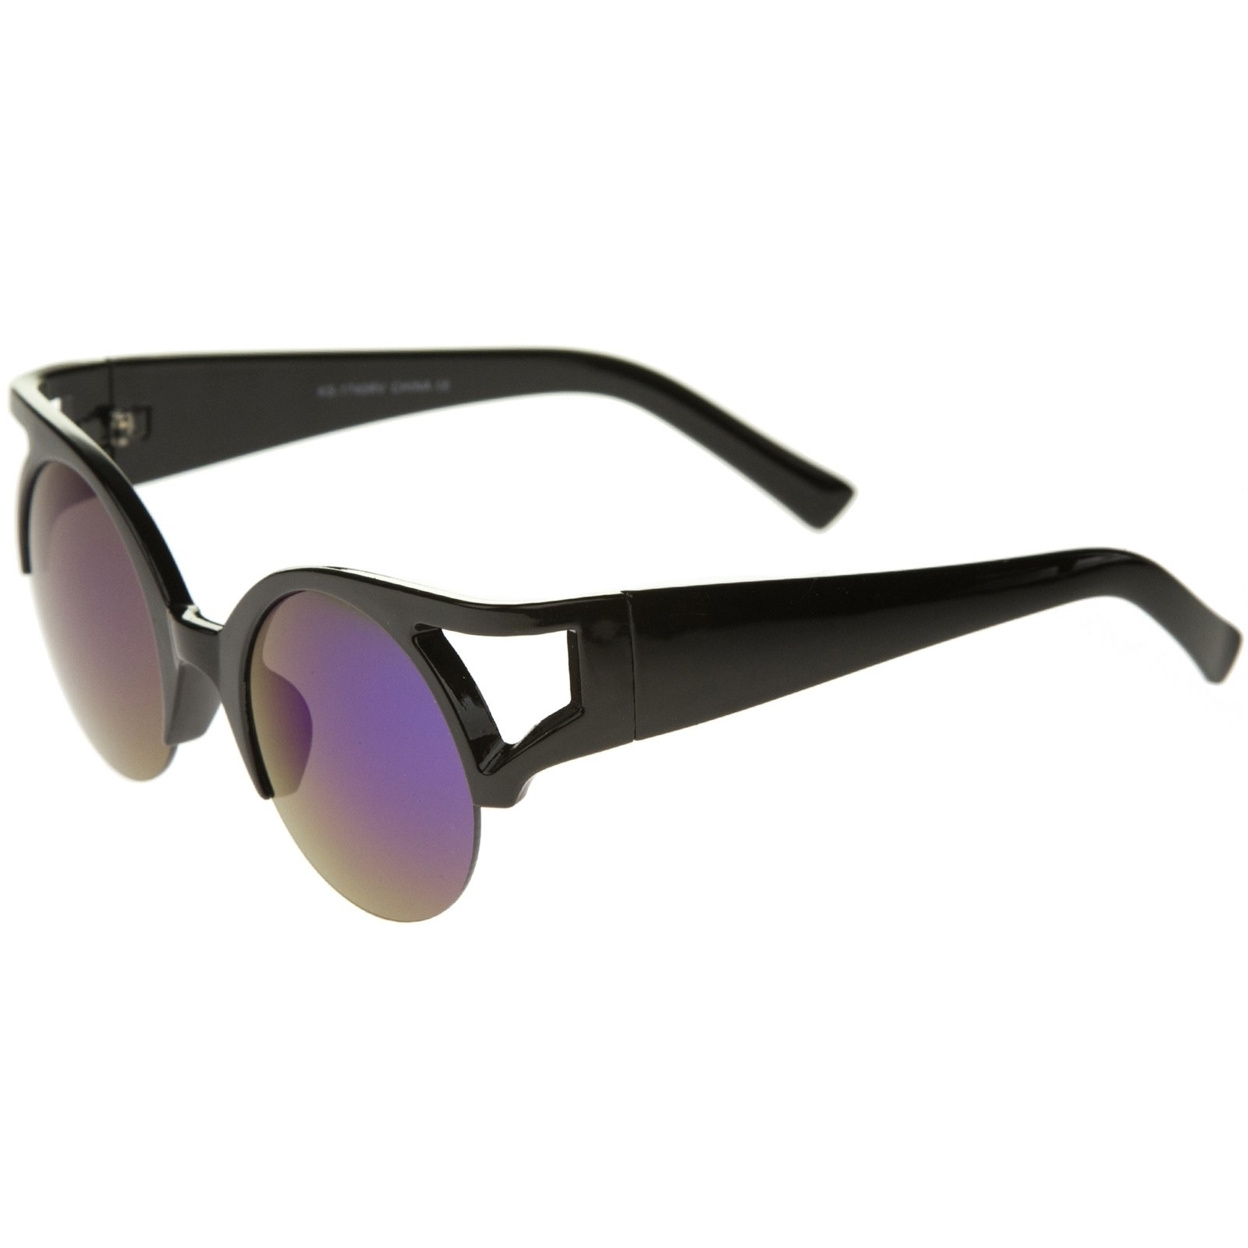 Women's Round Mirrored Lens Half Frame Cutout Cat Eye Sunglasses 50mm - Black / Green Mirror